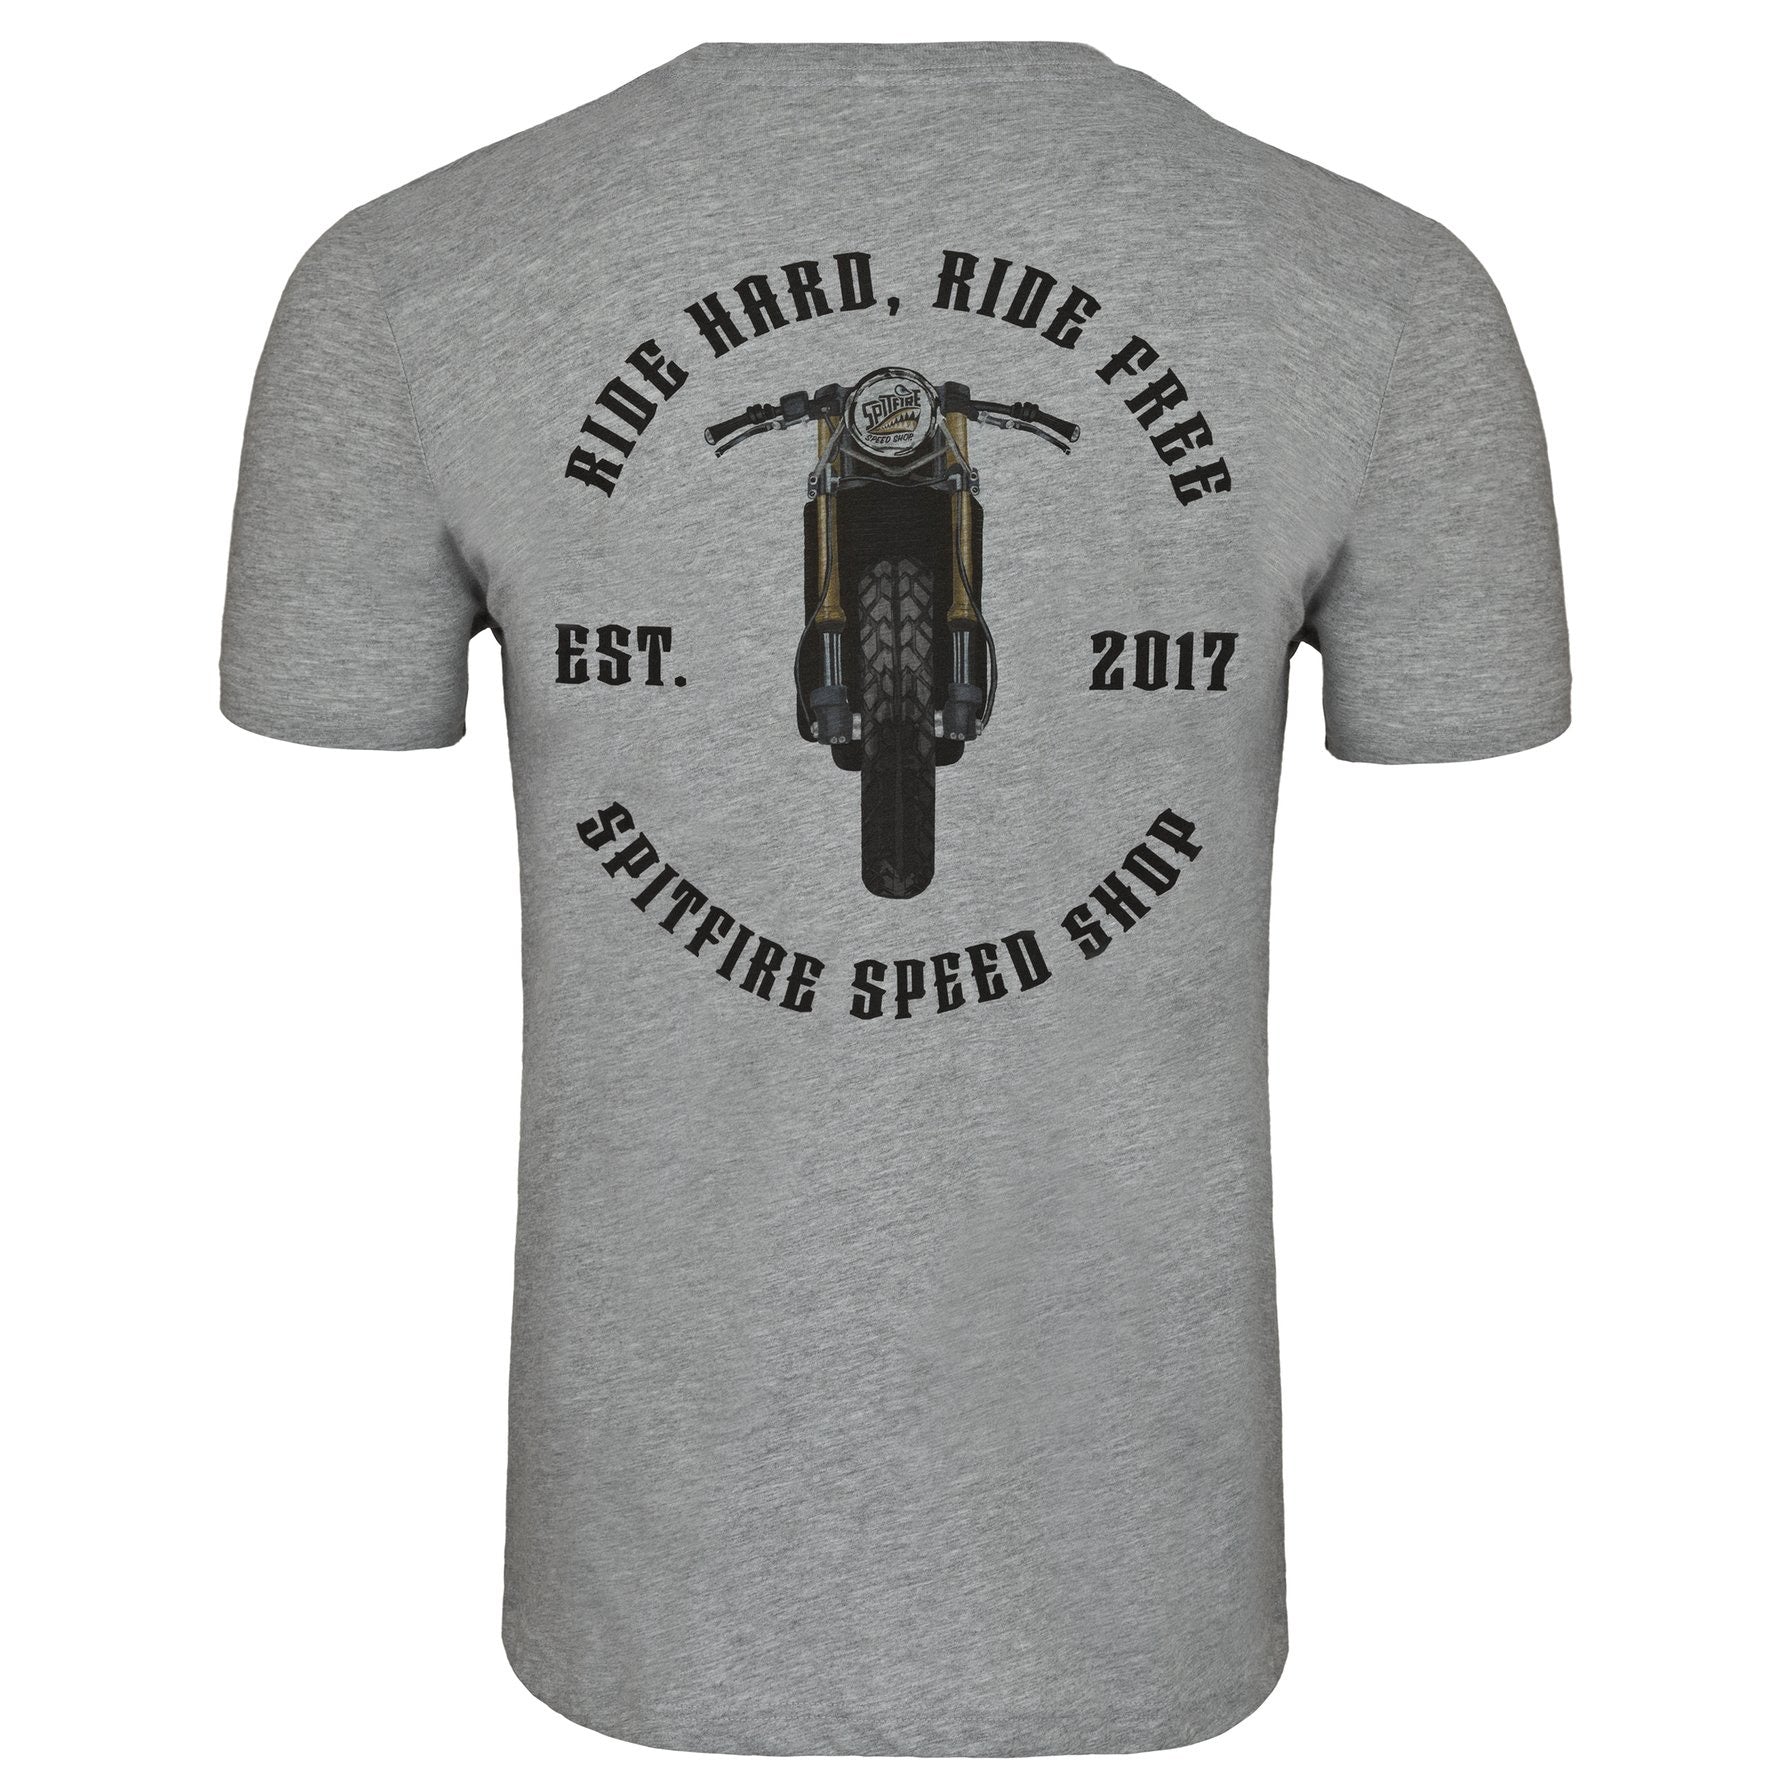 Spitfire T-Shirt Grey With Ride Hard Logo